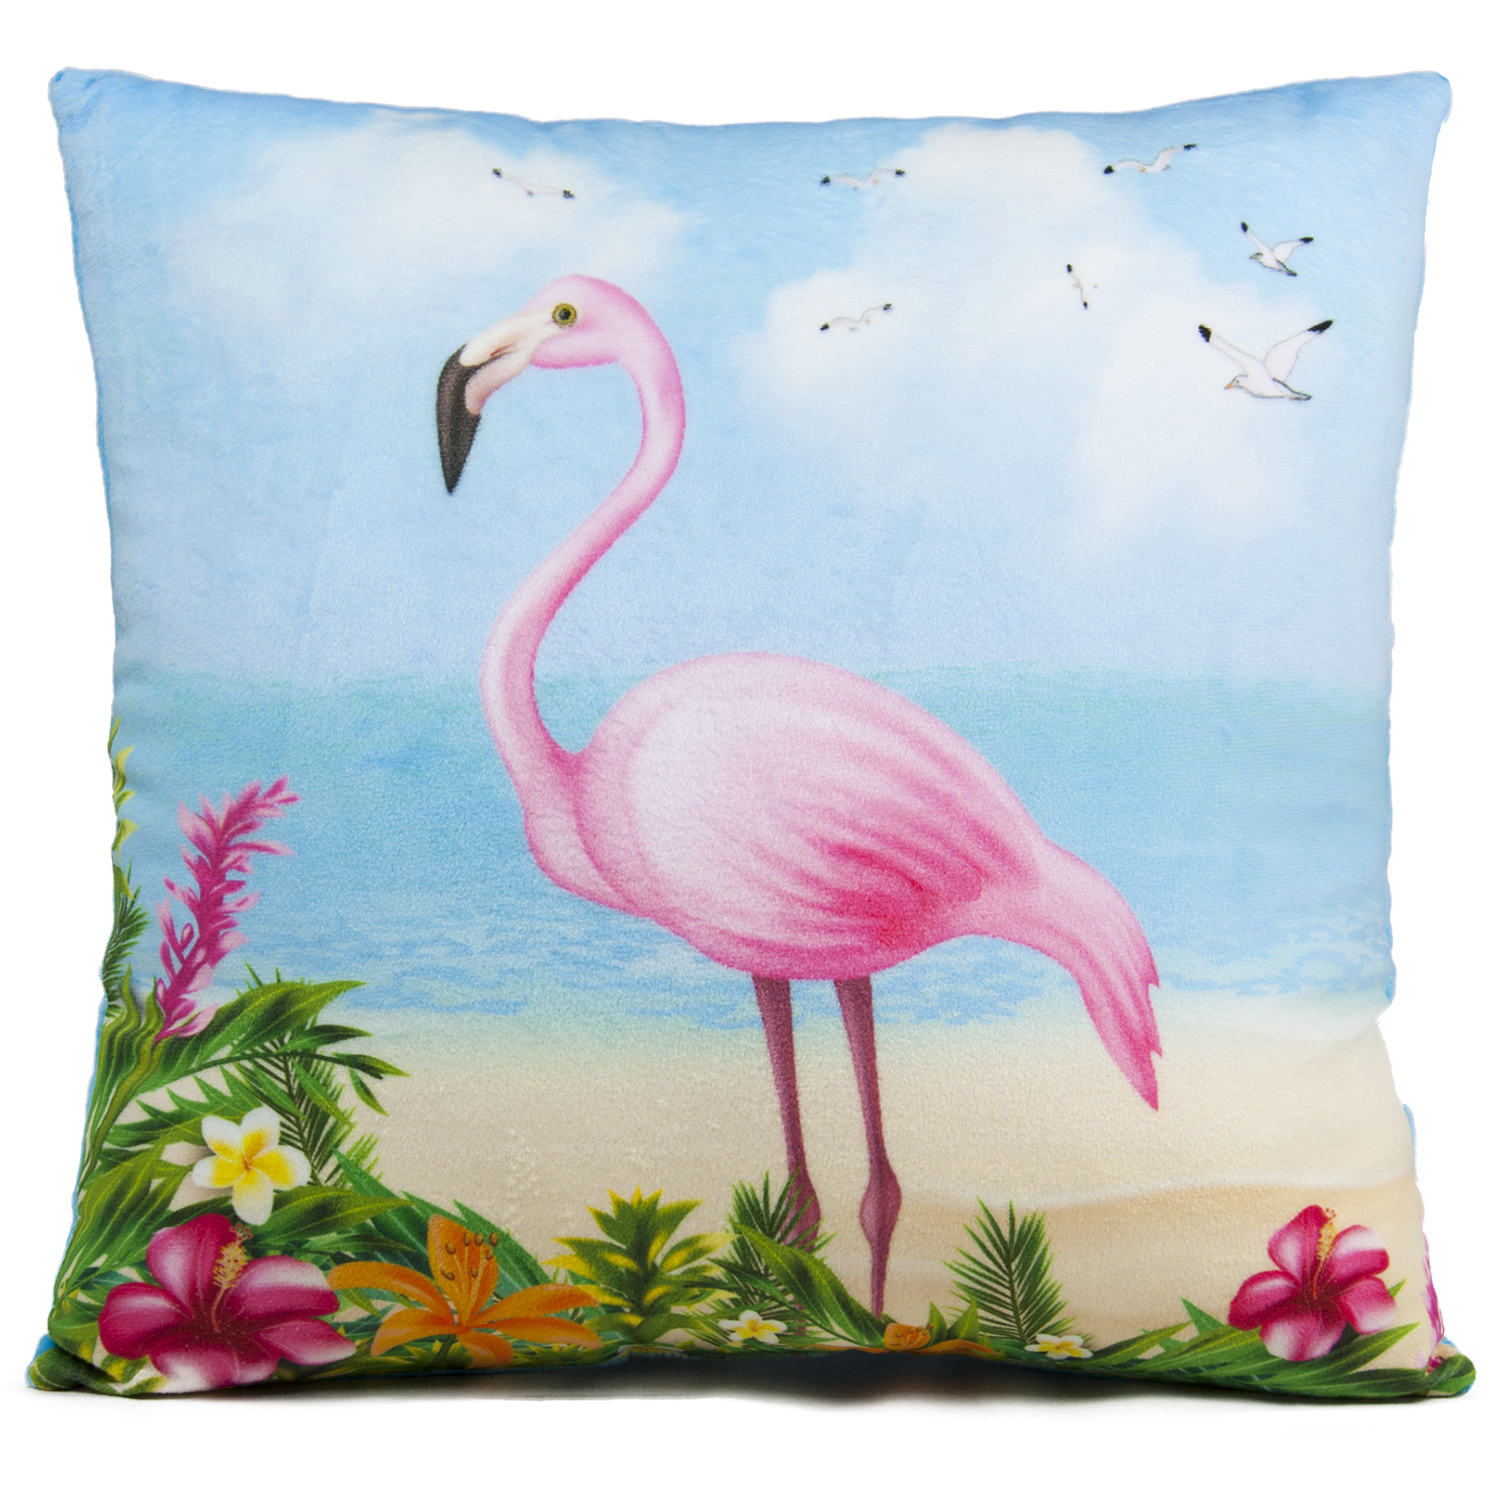 Pillow with flamingo